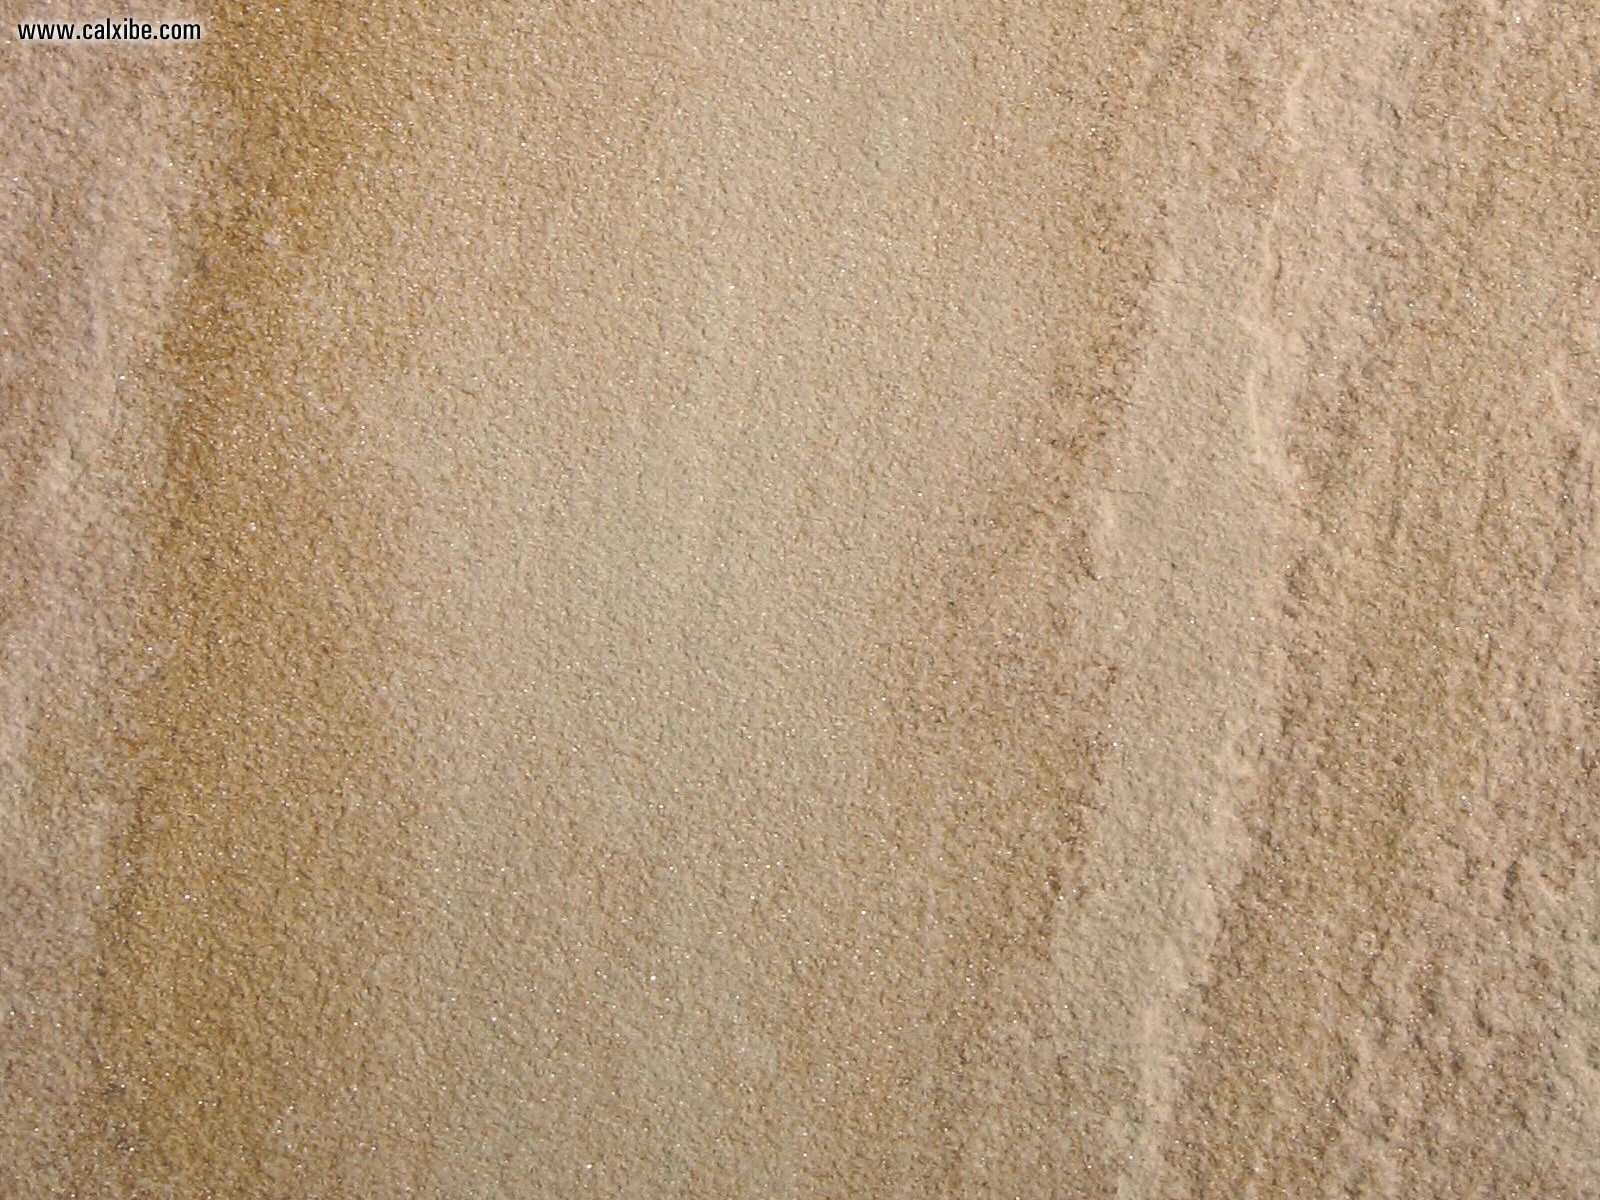 Sandstone From Afton Minnesota Specimen Urban